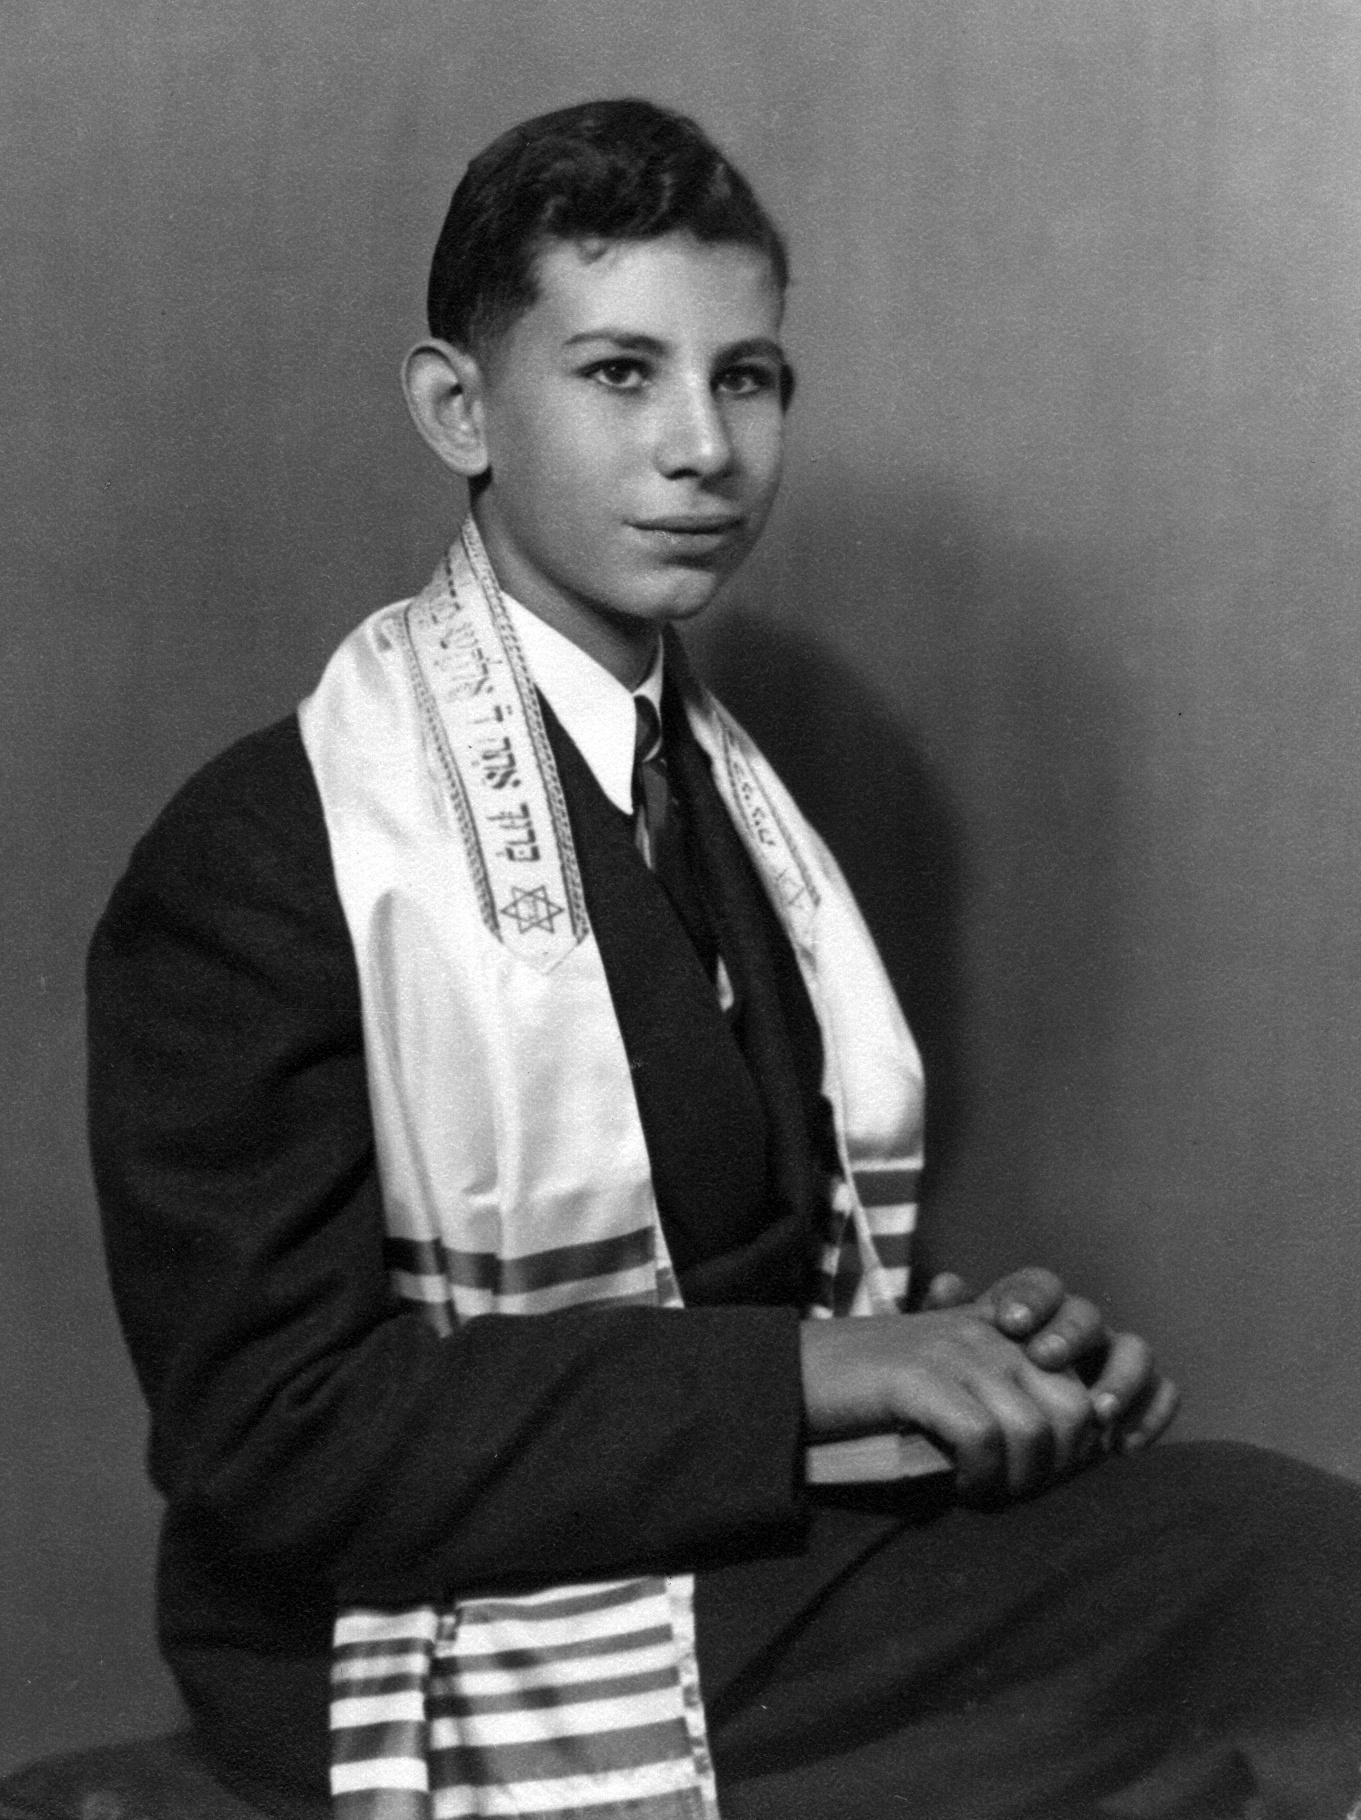 Richard Zemon, bar mitzvah, New York, 1941